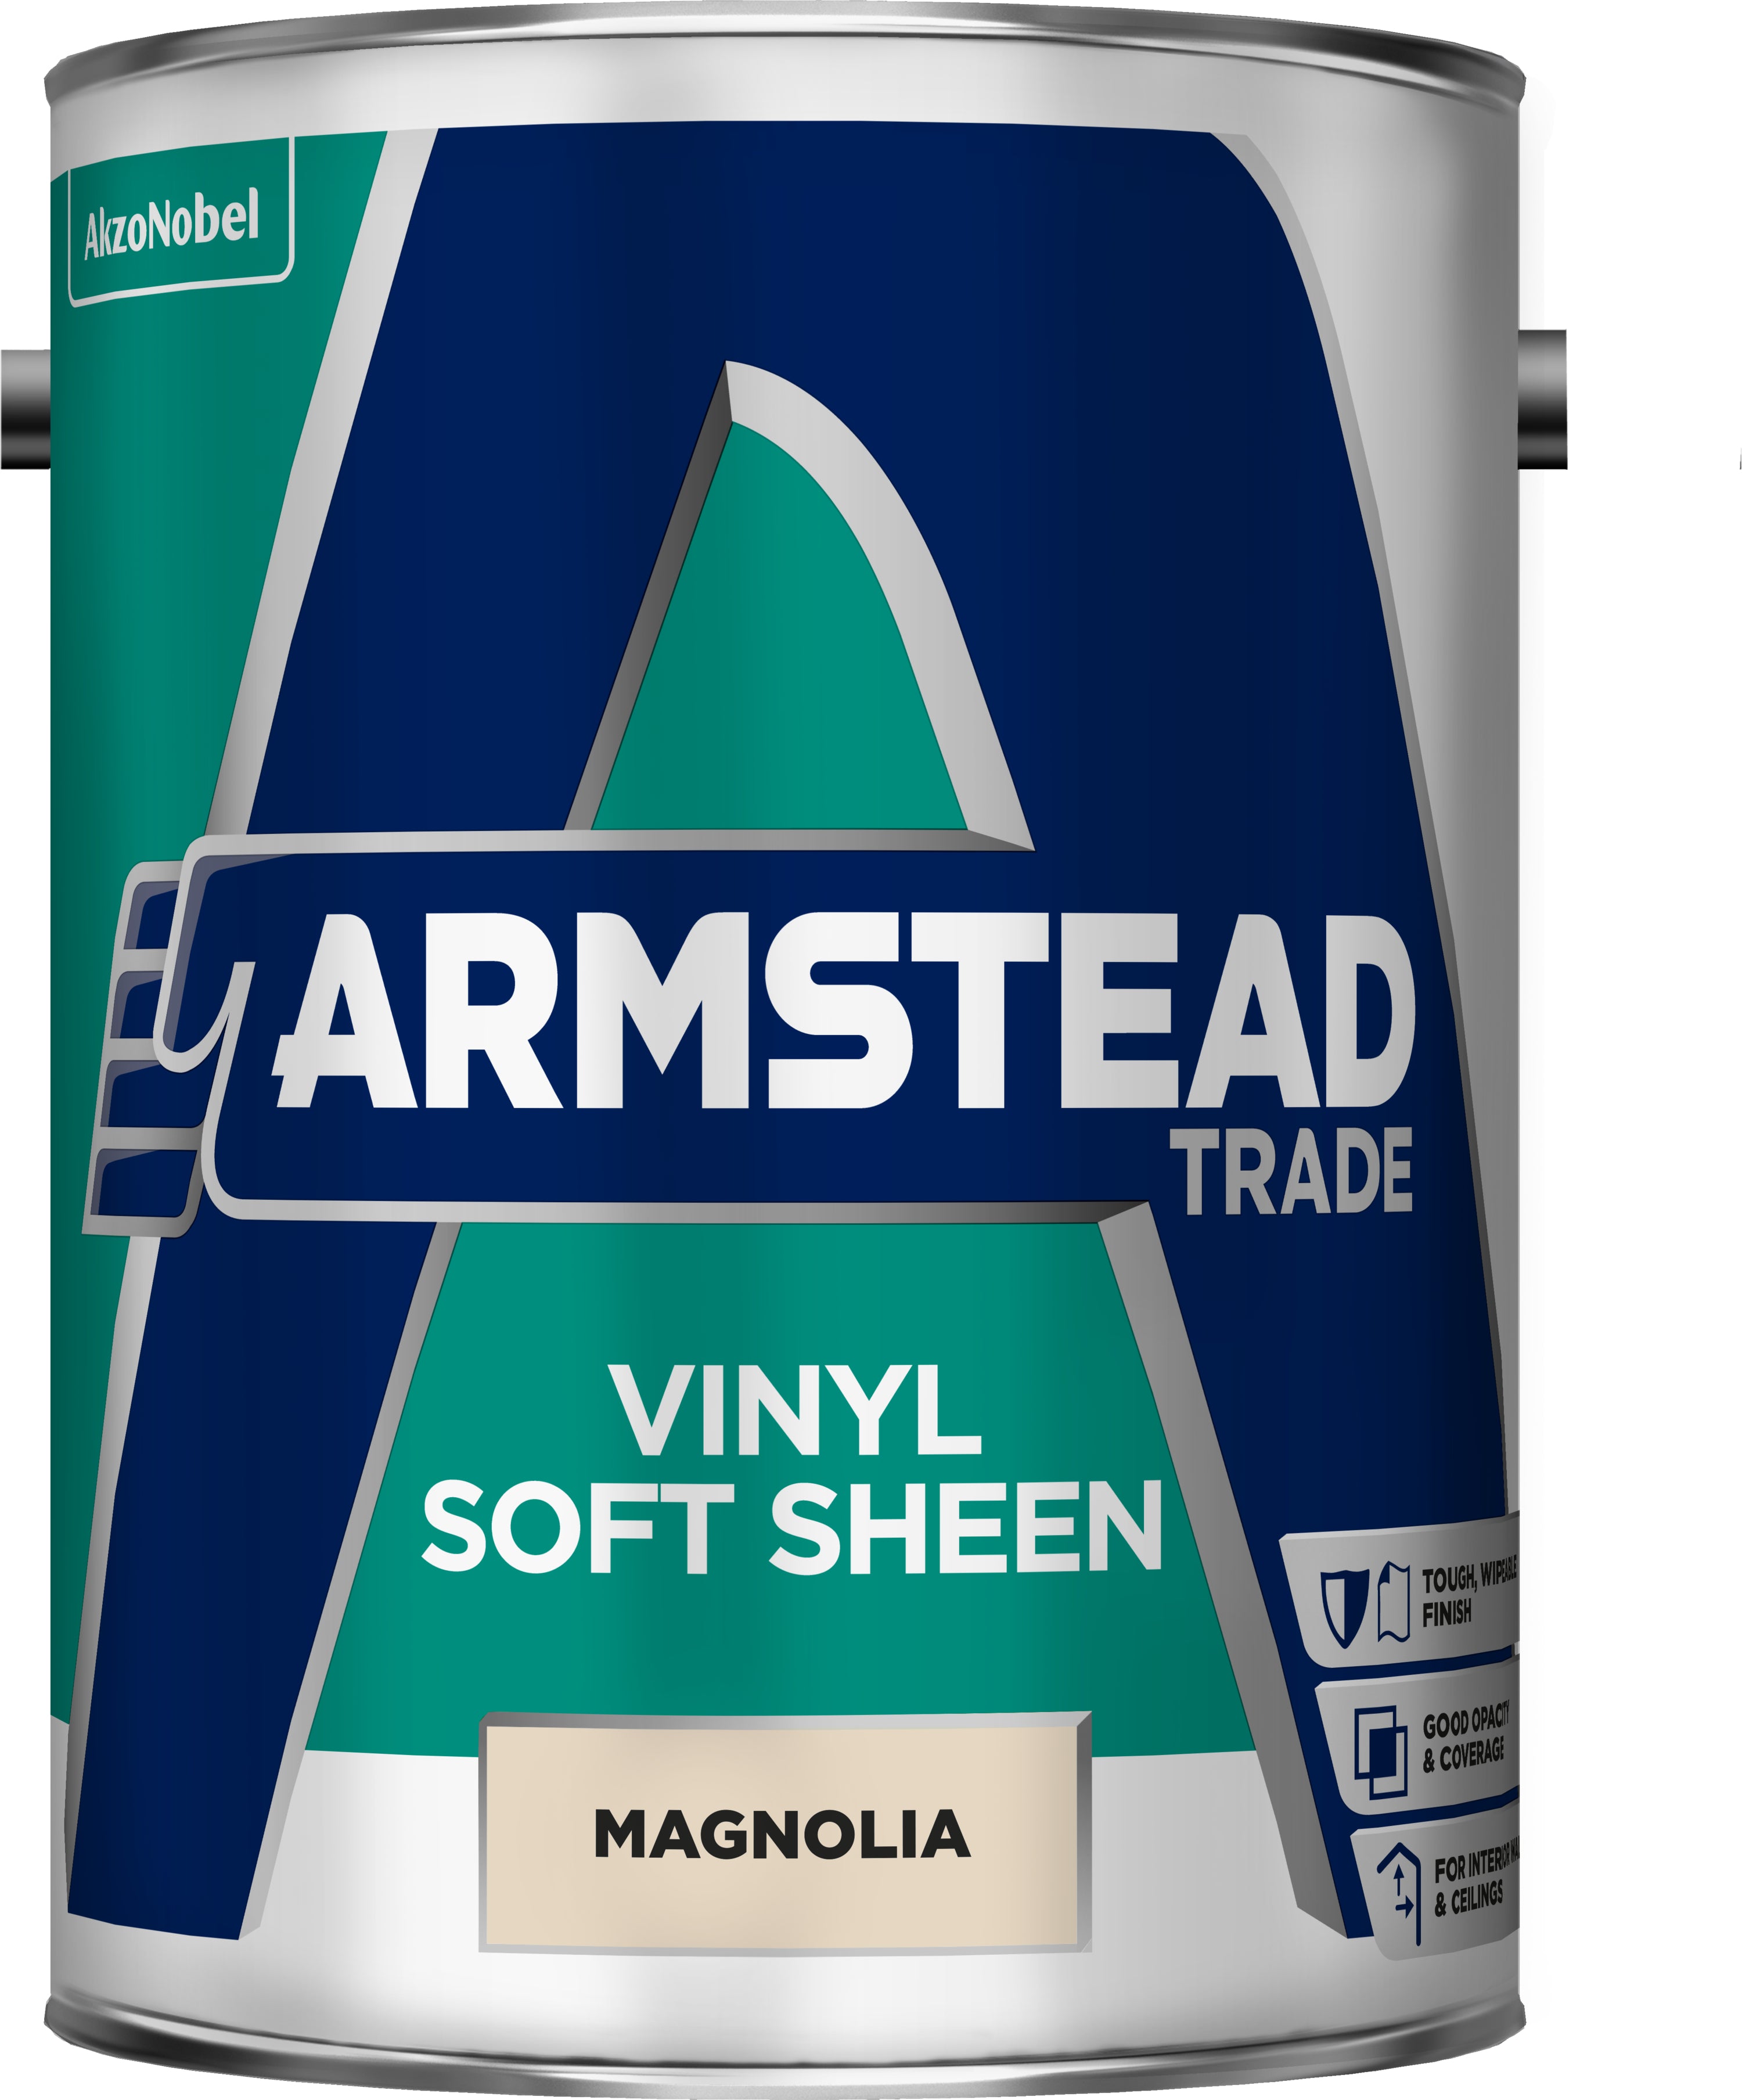 Armstead Vinyl Soft Sheen - Magnolia